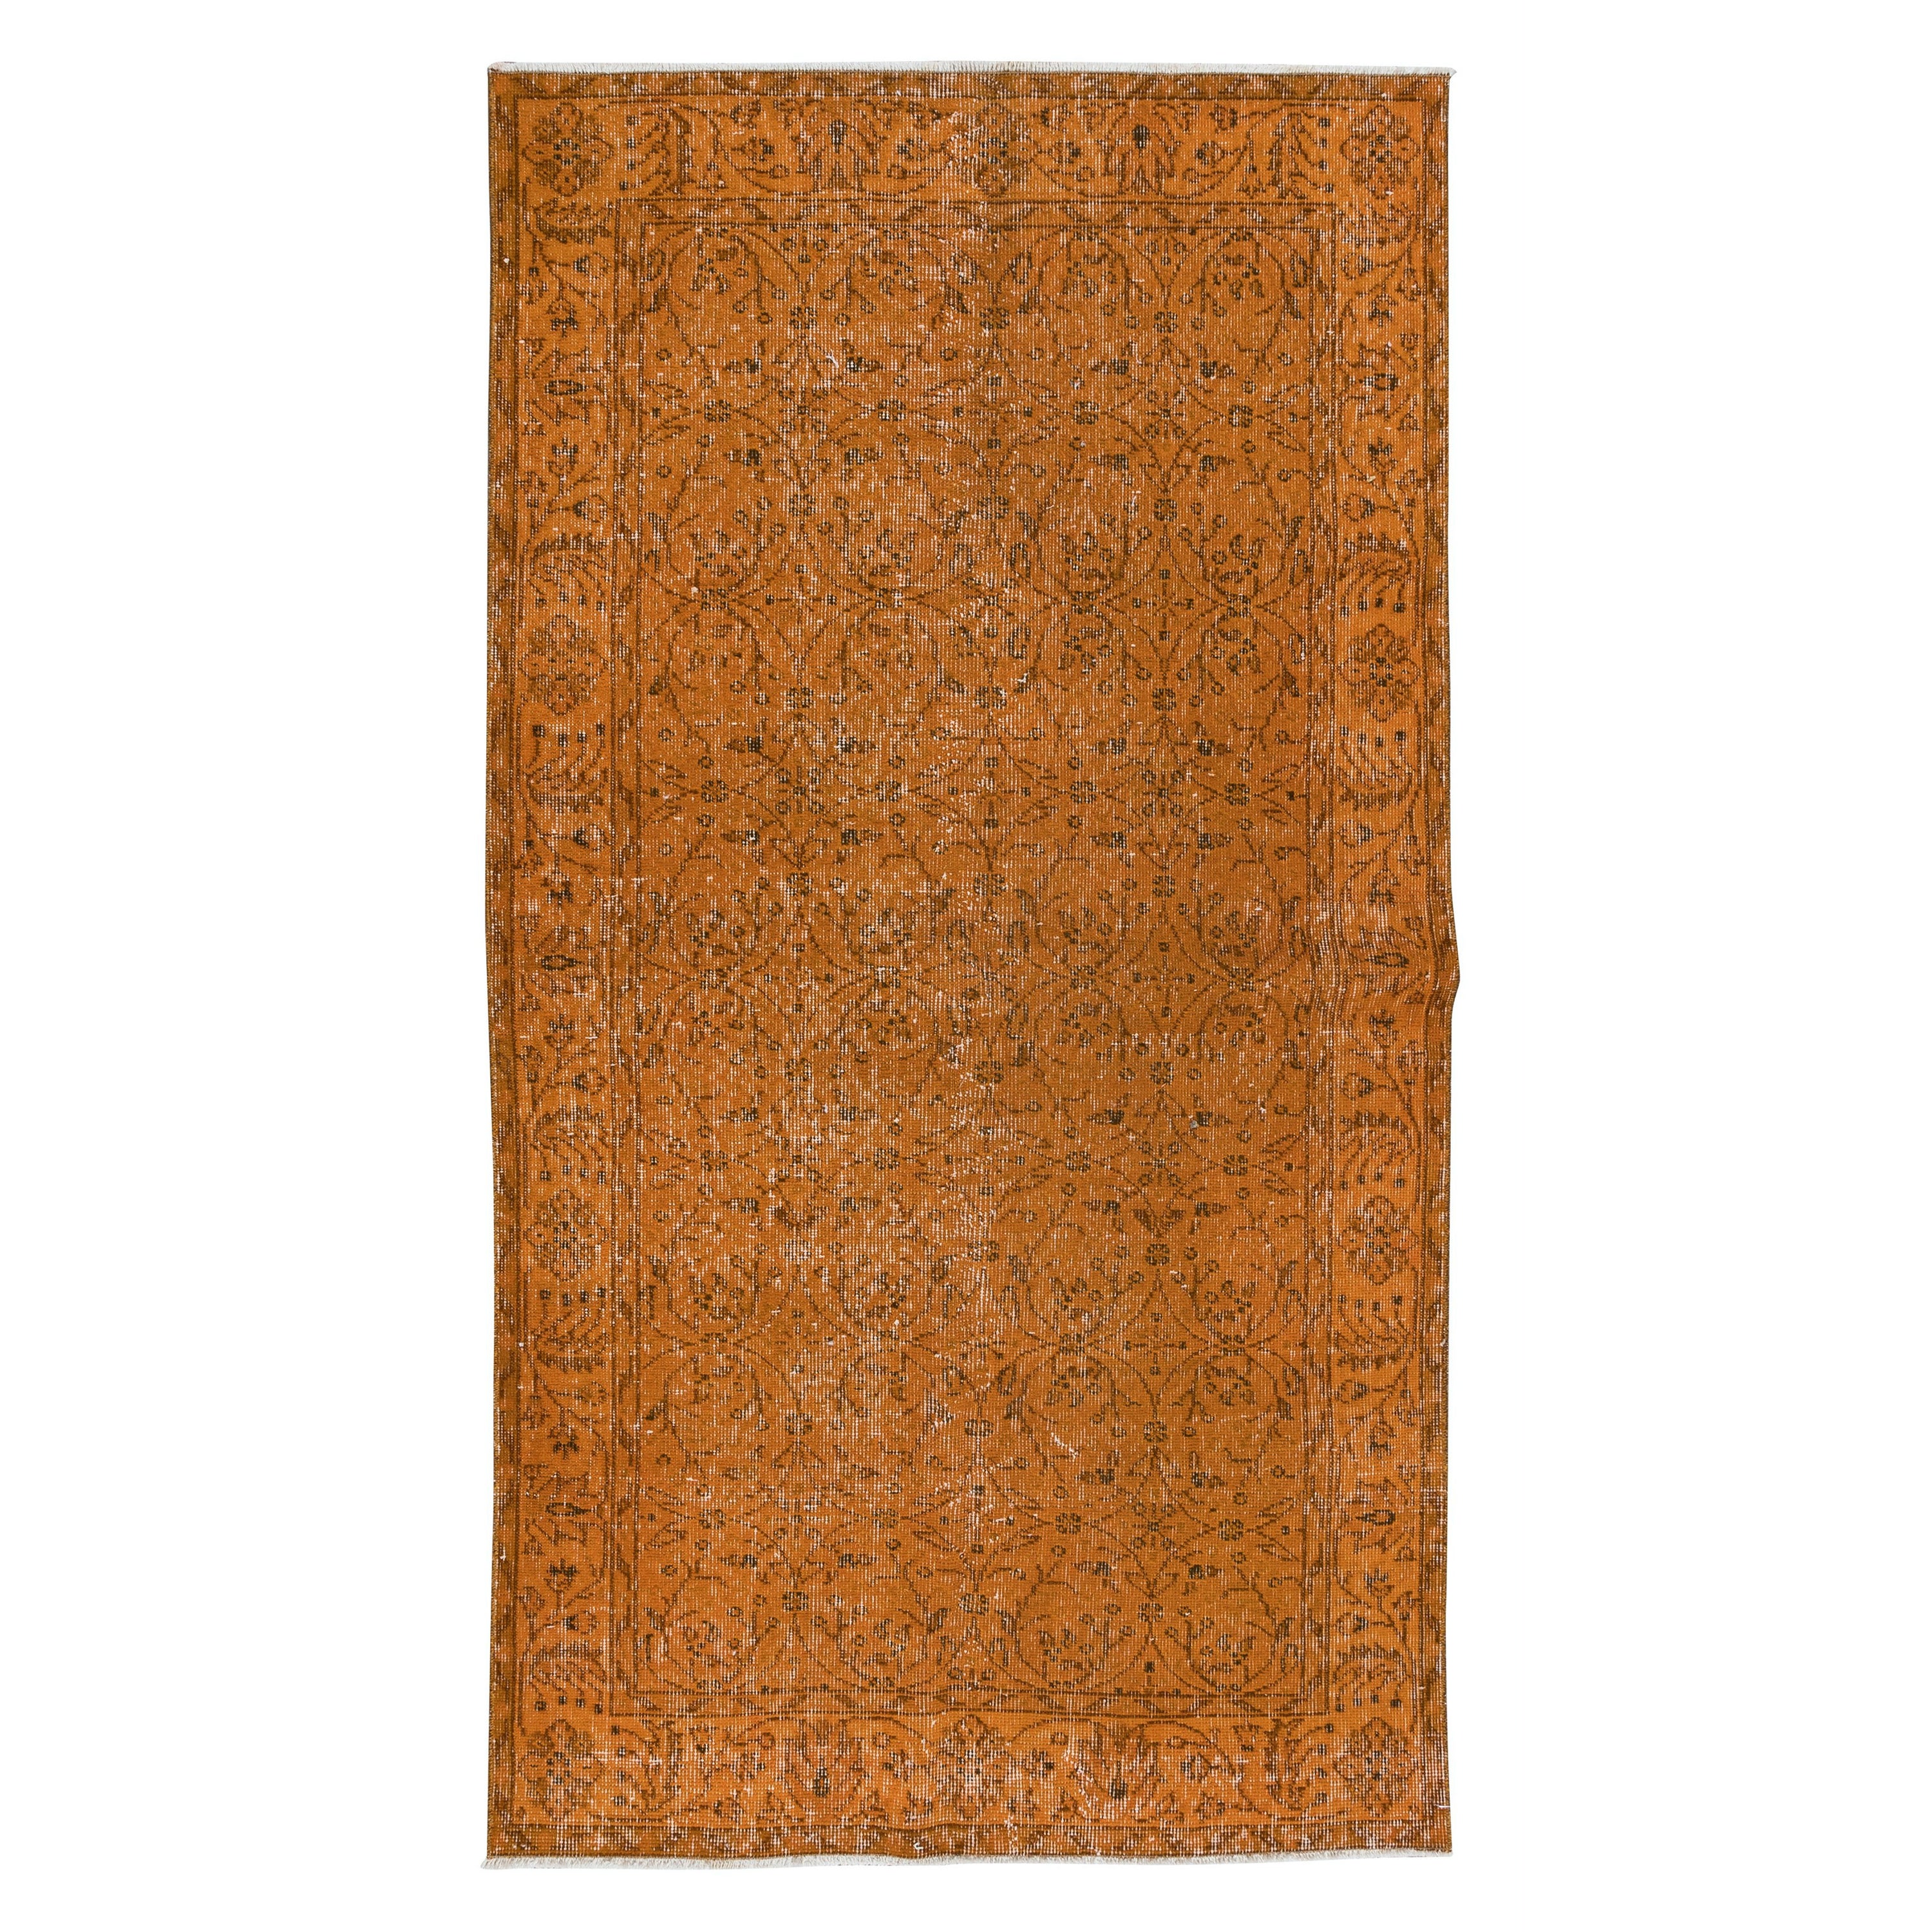 3.7x6.8 Ft Hand-Made Turkish Accent Rug in Orange, Modern Floral Pattern Carpet